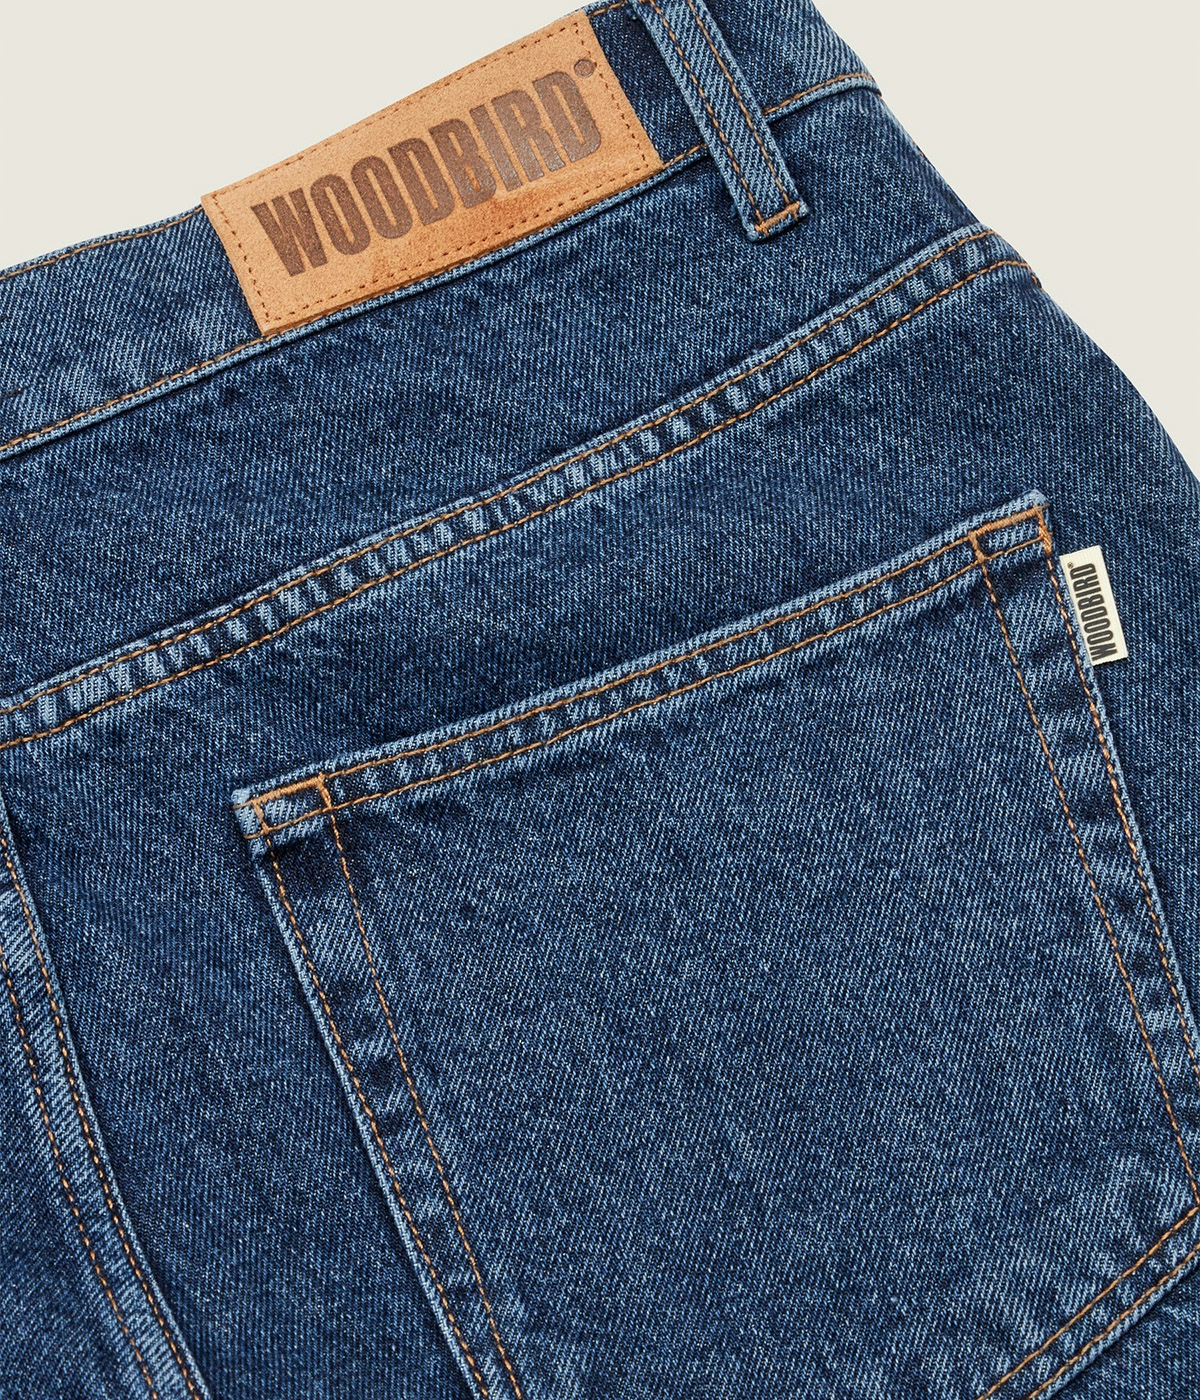 Woodbird Jeans Leroy 90s Rinse 90s Blue 3